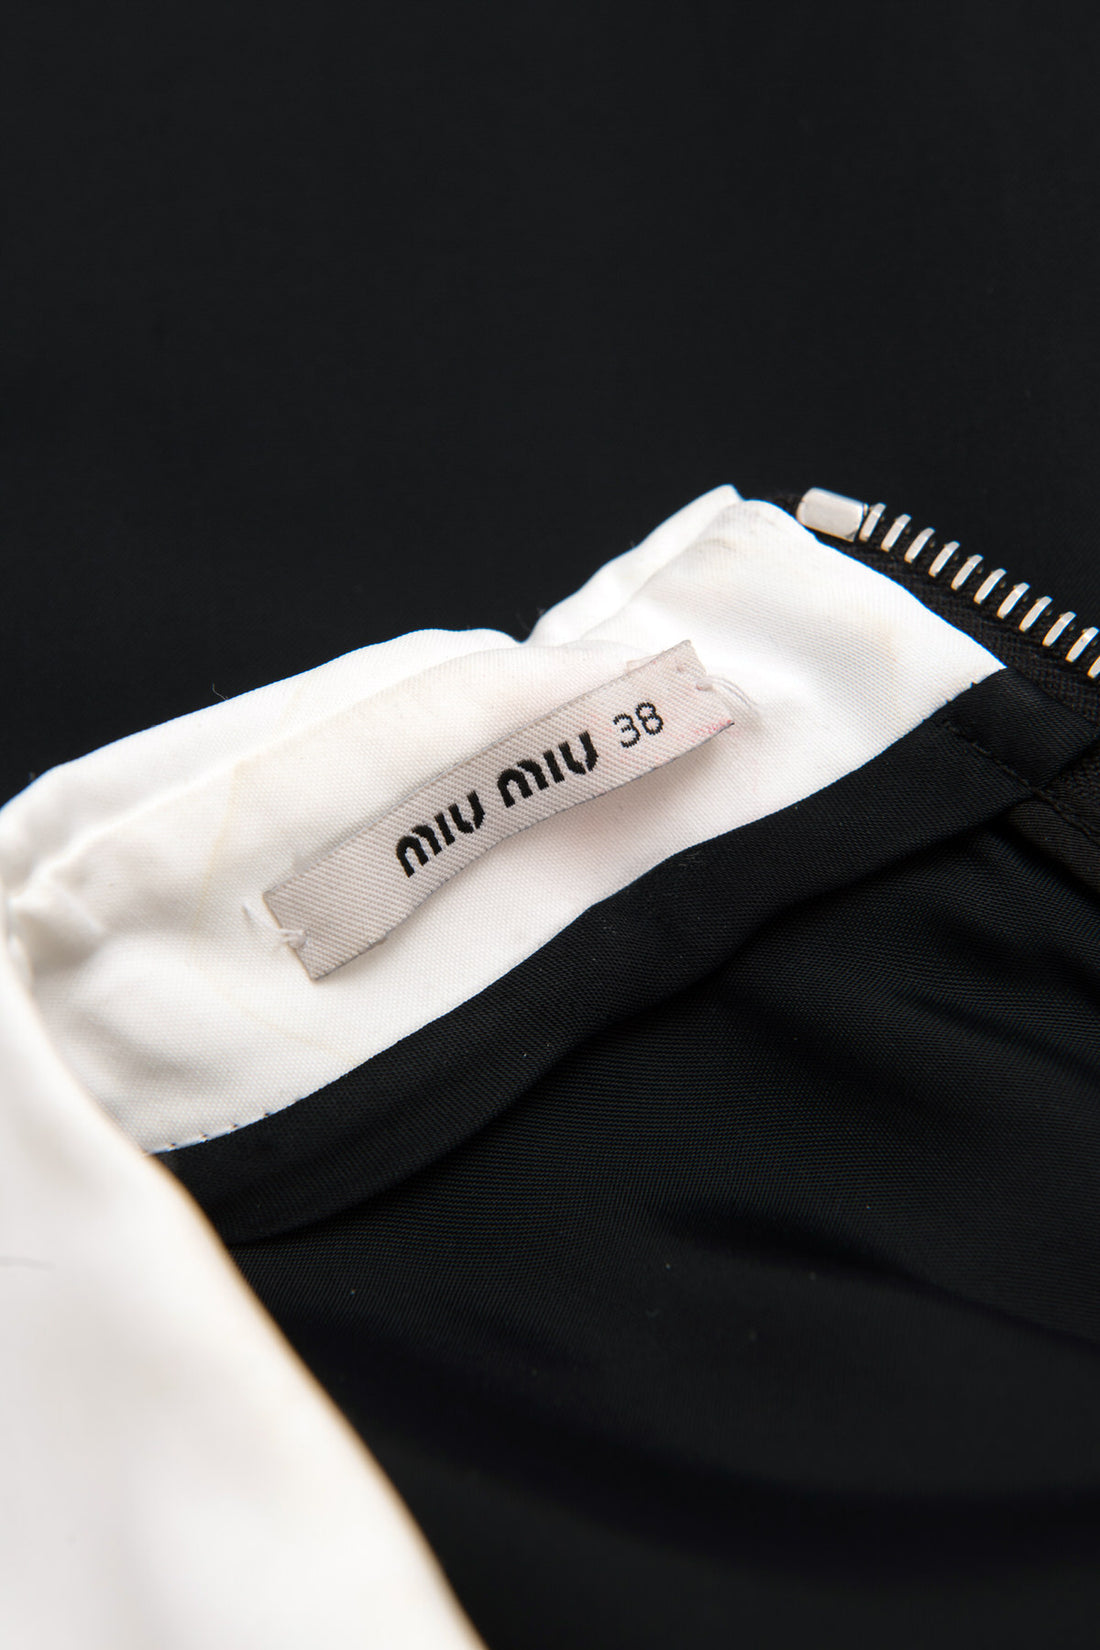 Miu Miu Black Washed Satin Dress with White Collar